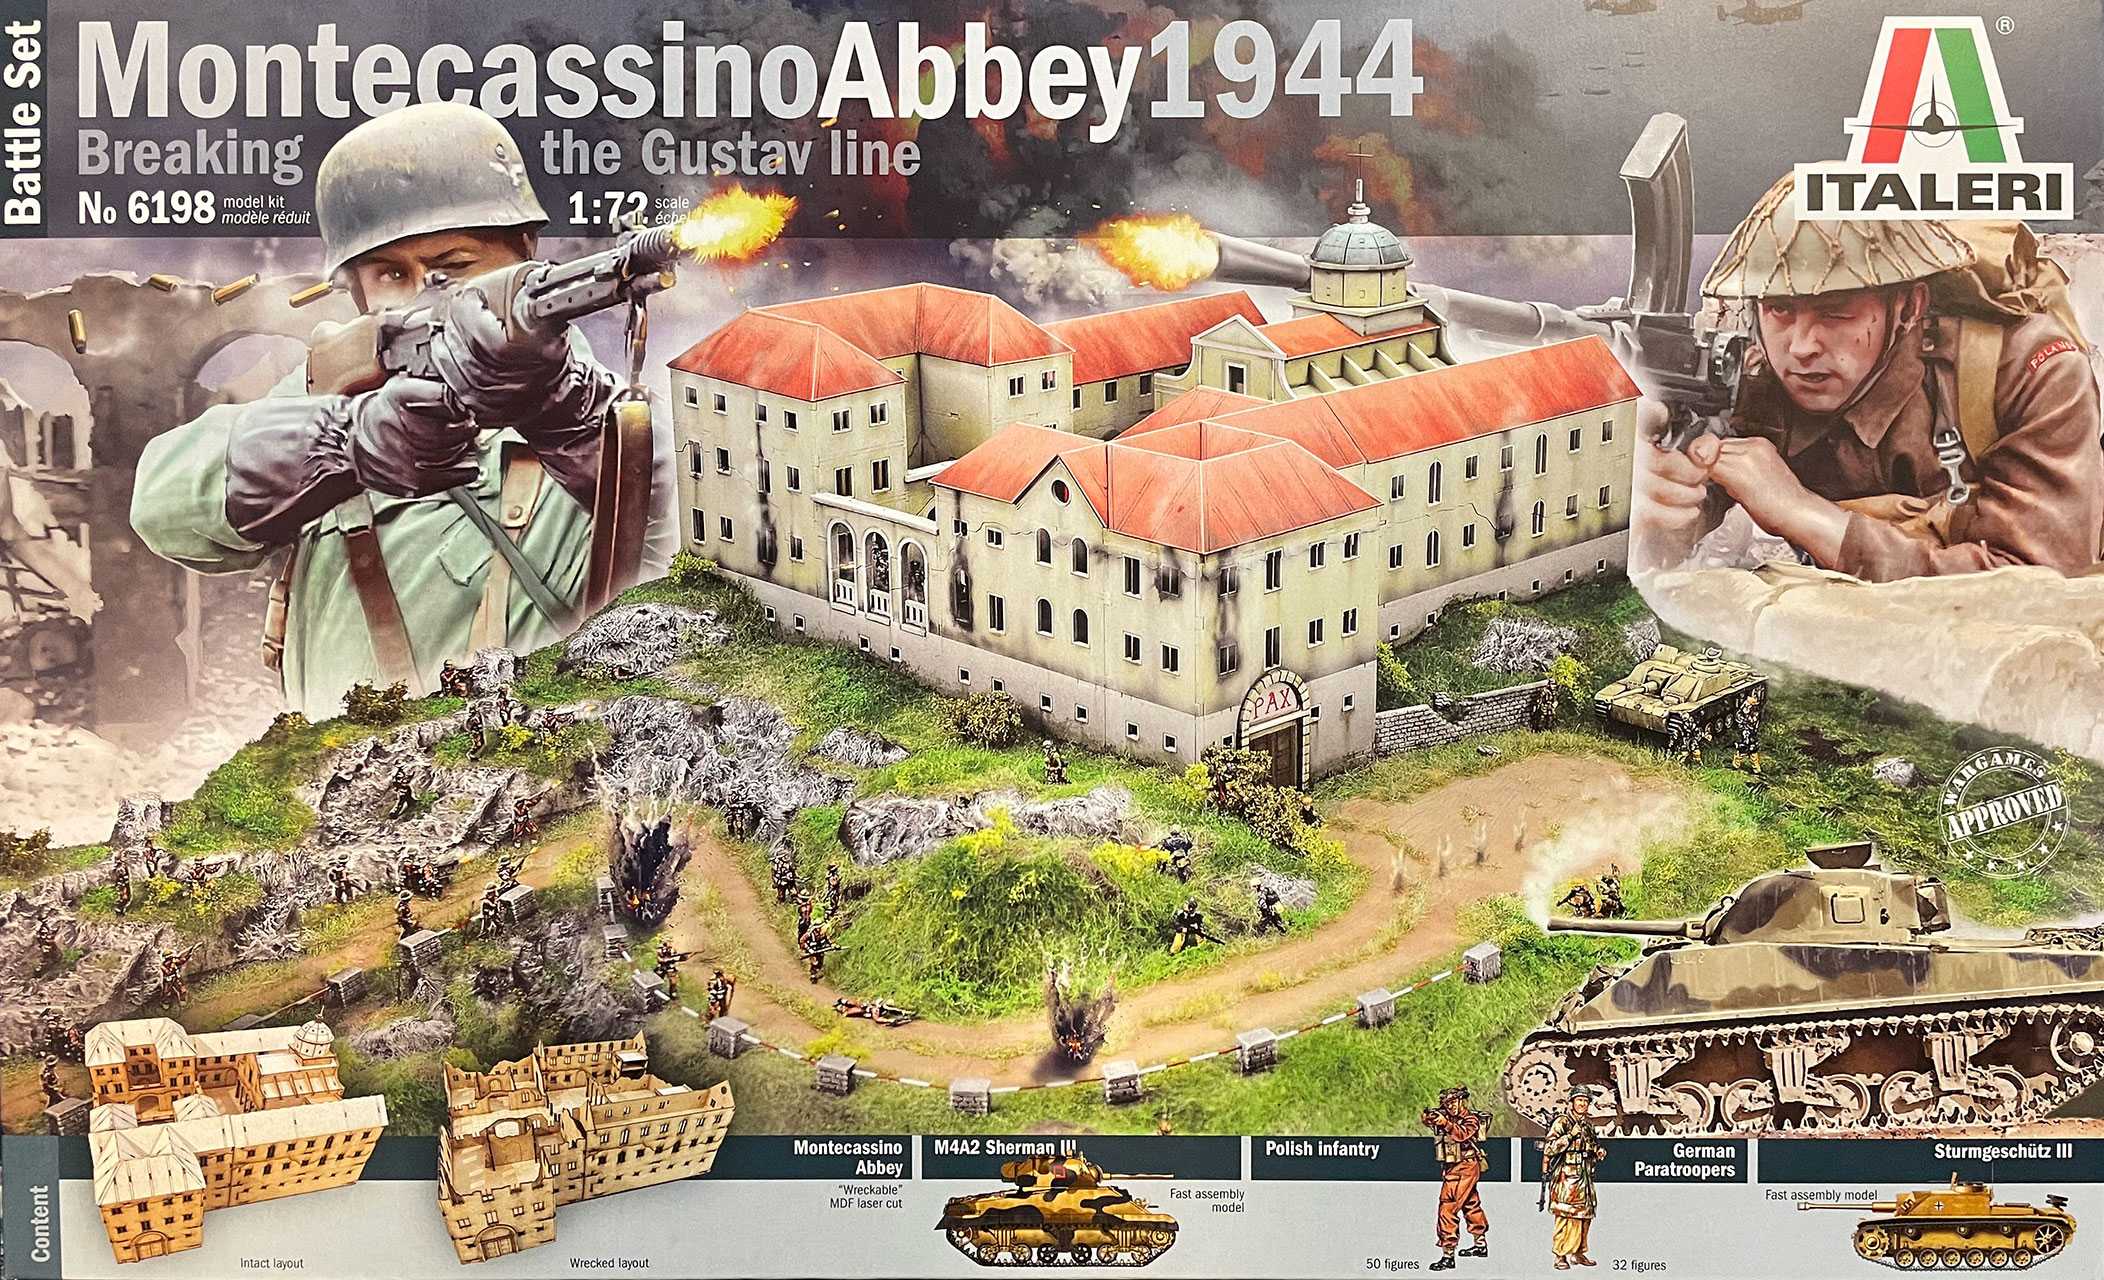 Montecassino Abbey - Gustav line - 1944